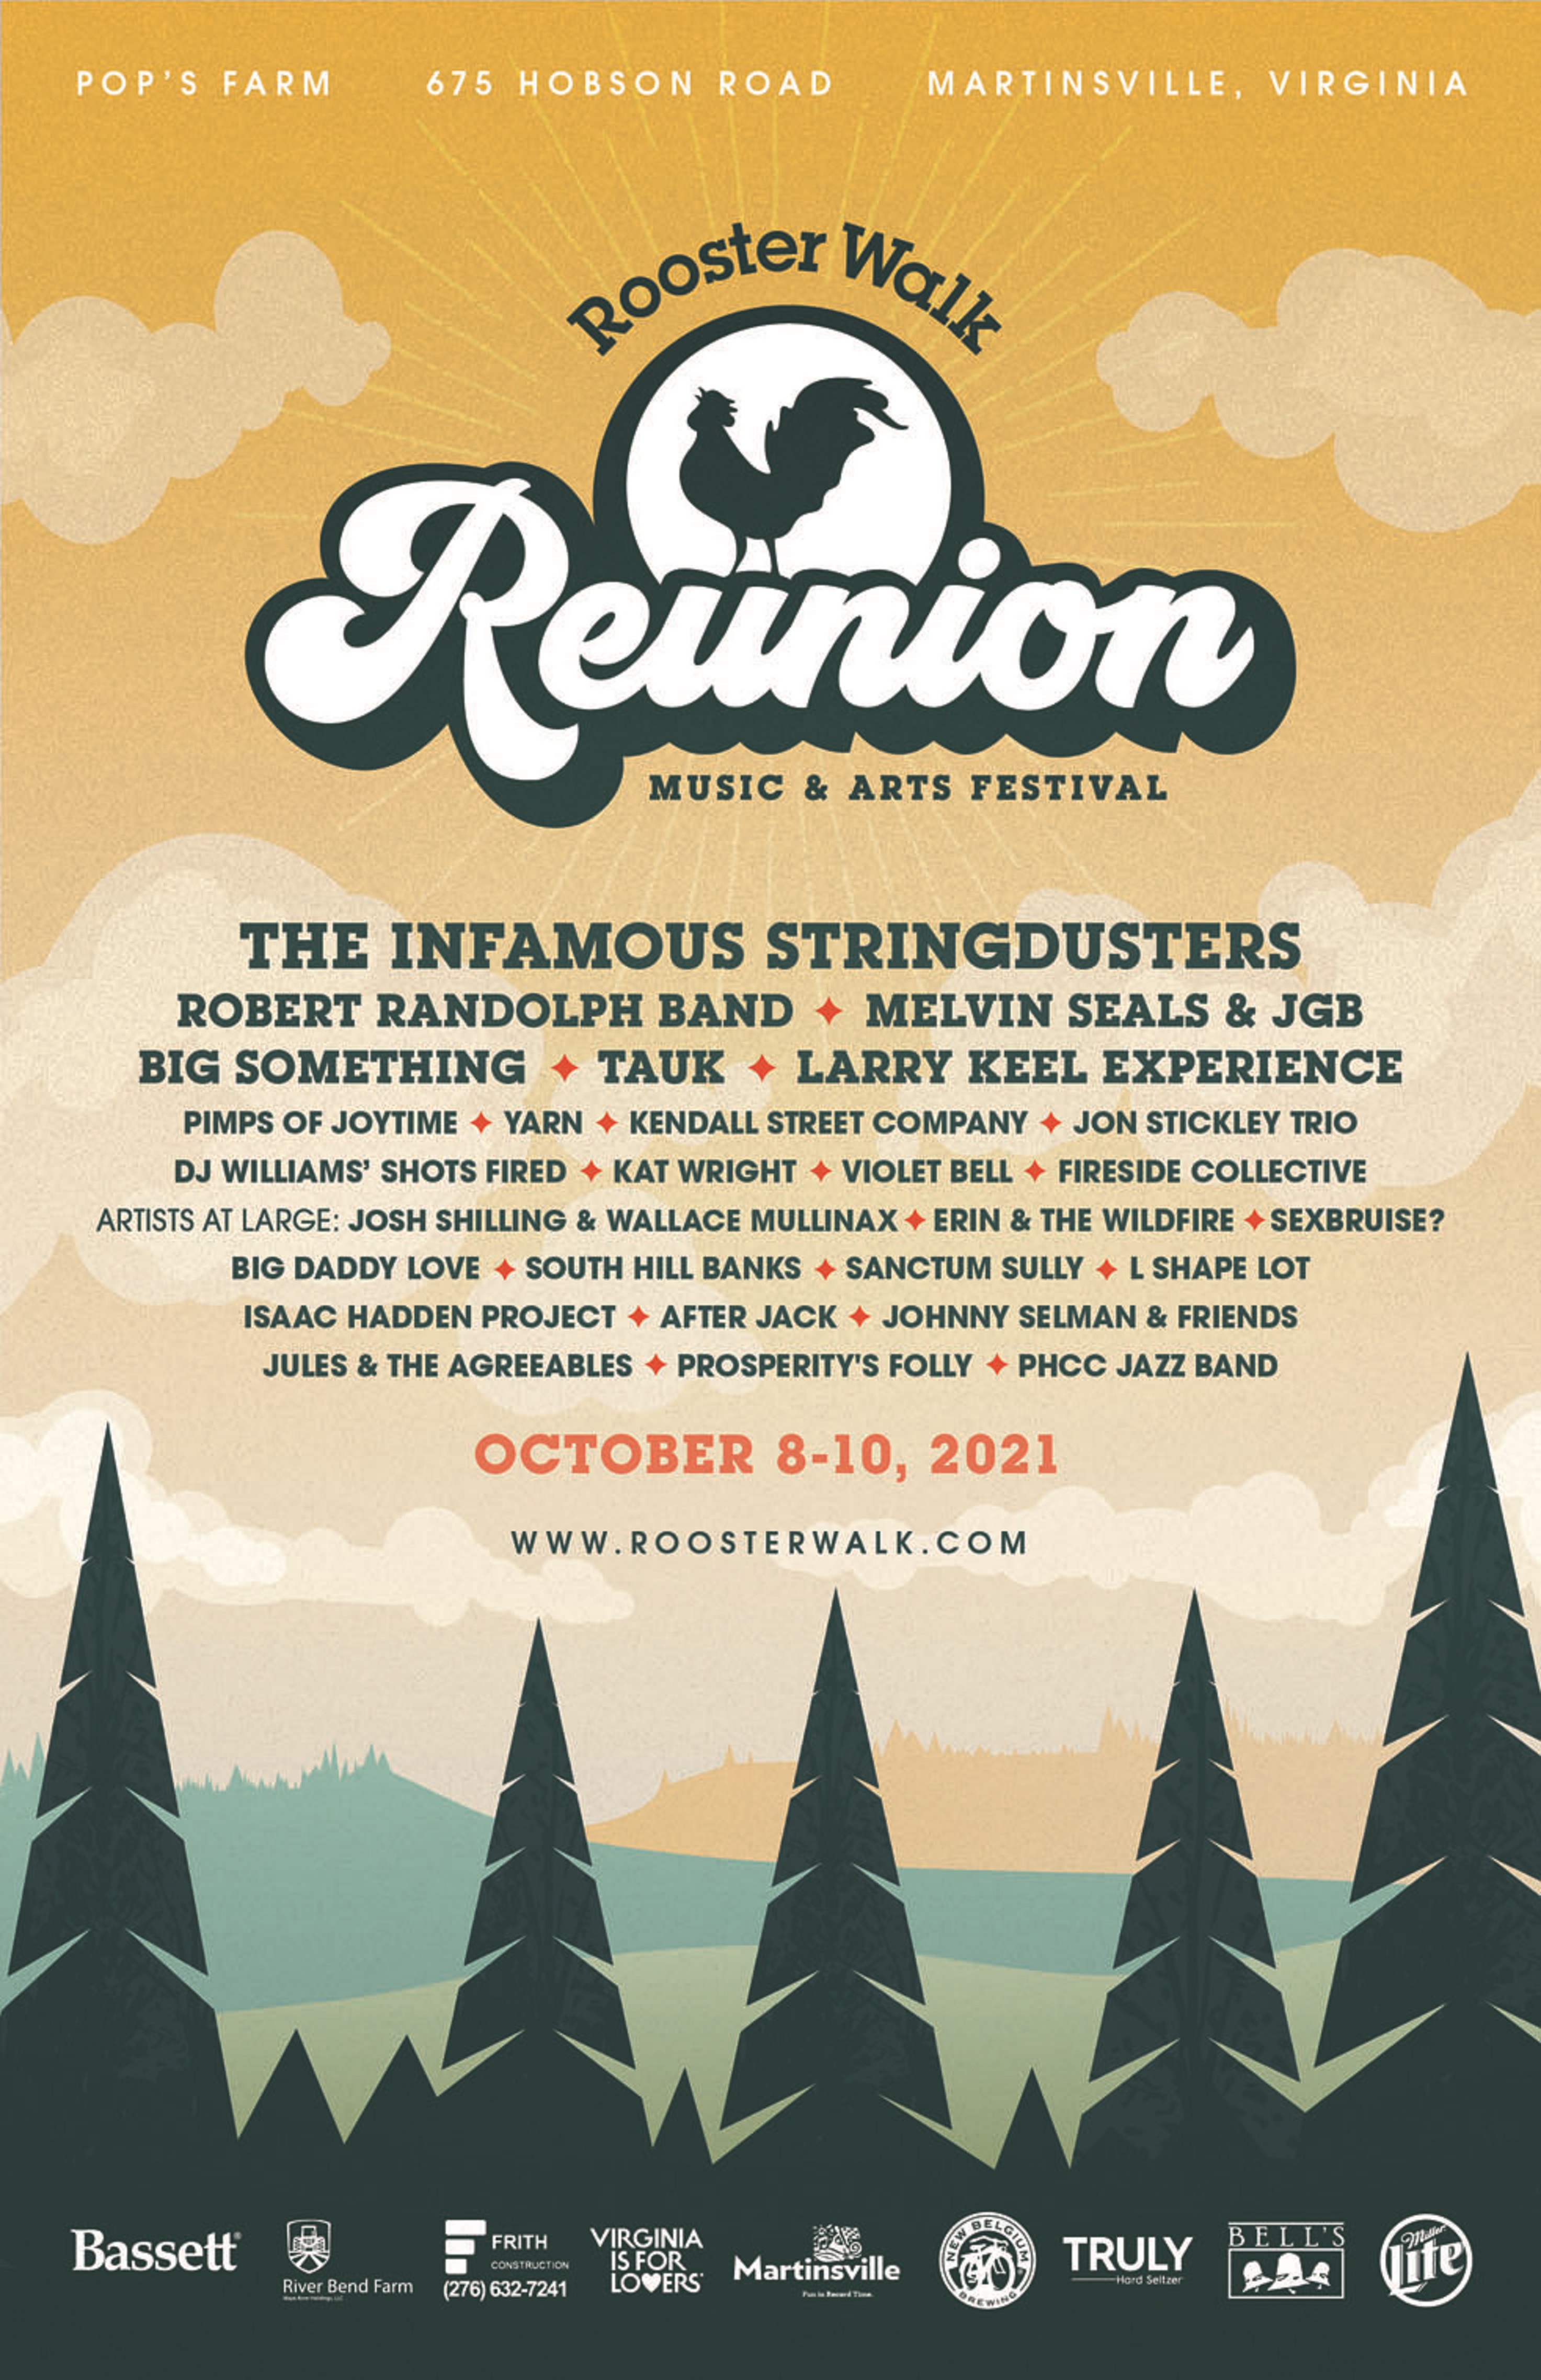 ANNOUNCING Rooster Walk Reunion festival Oct. 8-10, 2021